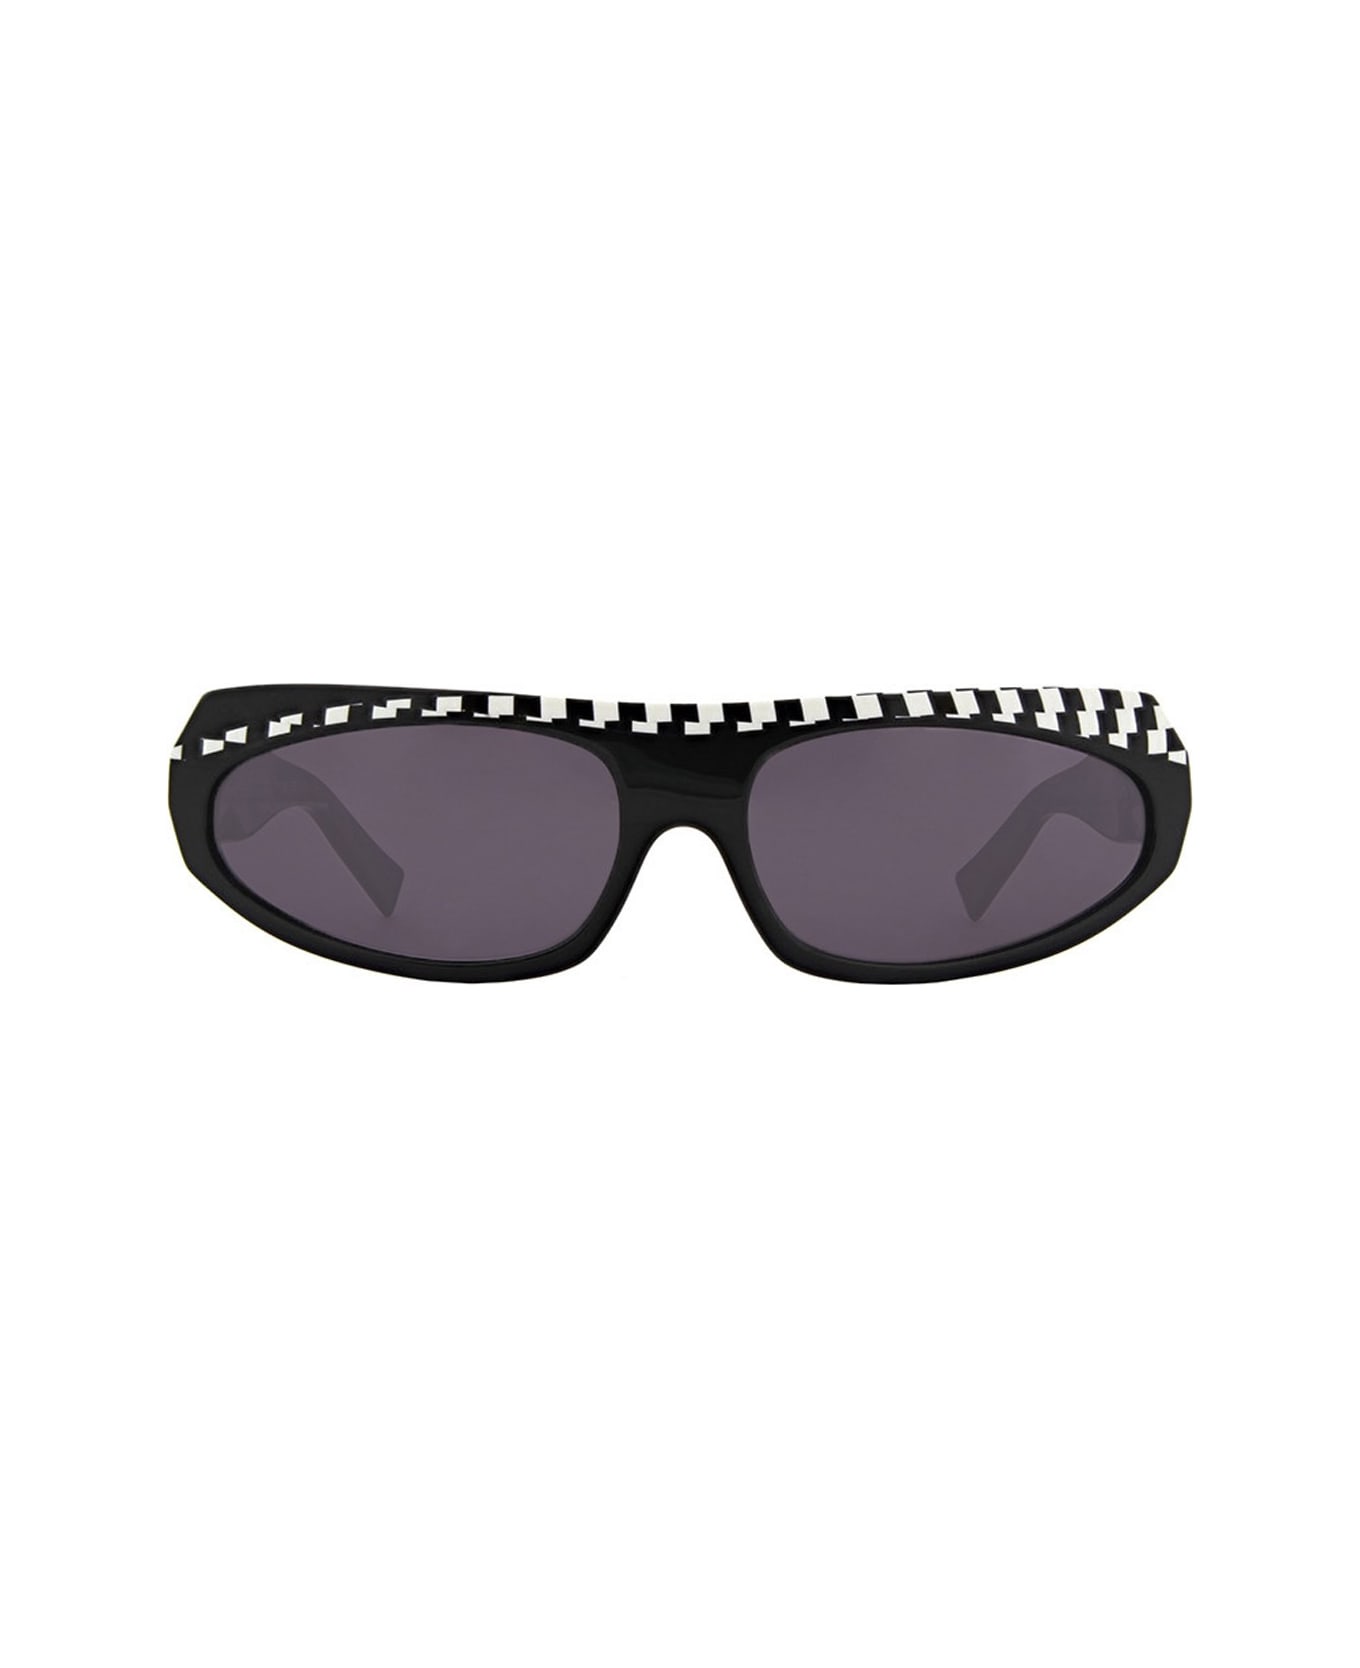 Alain Mikli A0850 Sunglasses - Nero サングラス